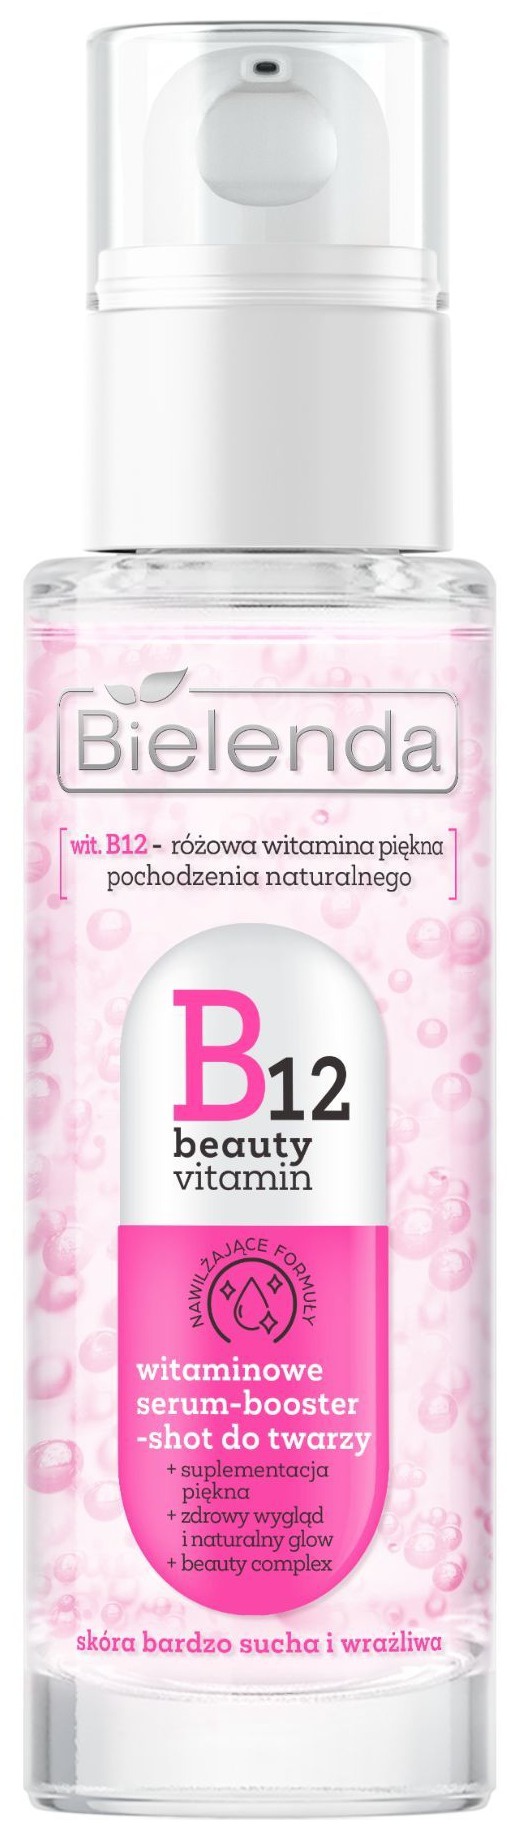 Bielenda B12 Beauty Vitamin Face Serum-Booster